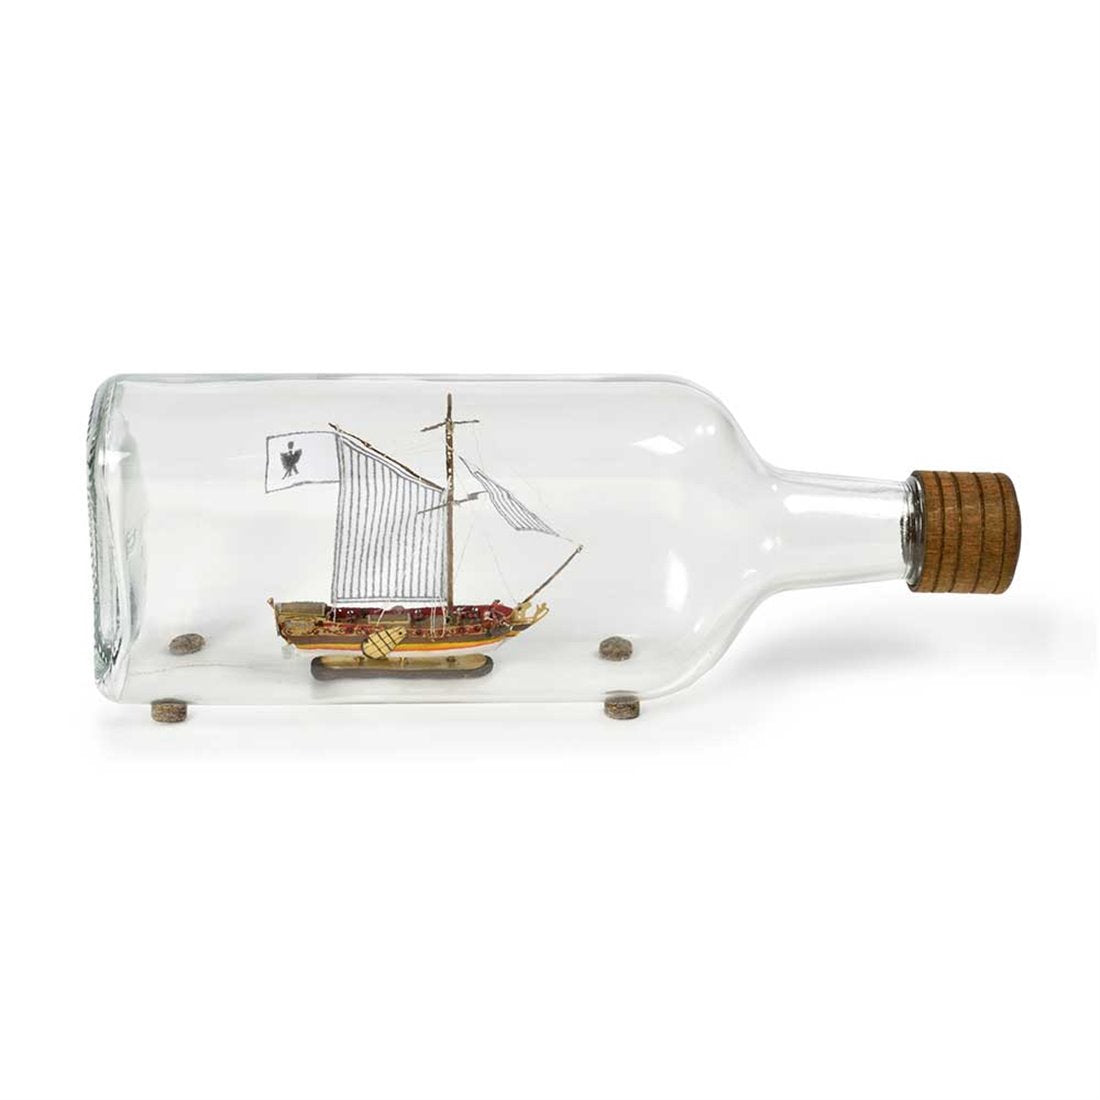 1350 Dutch Yacht Kit (ship in bottle)